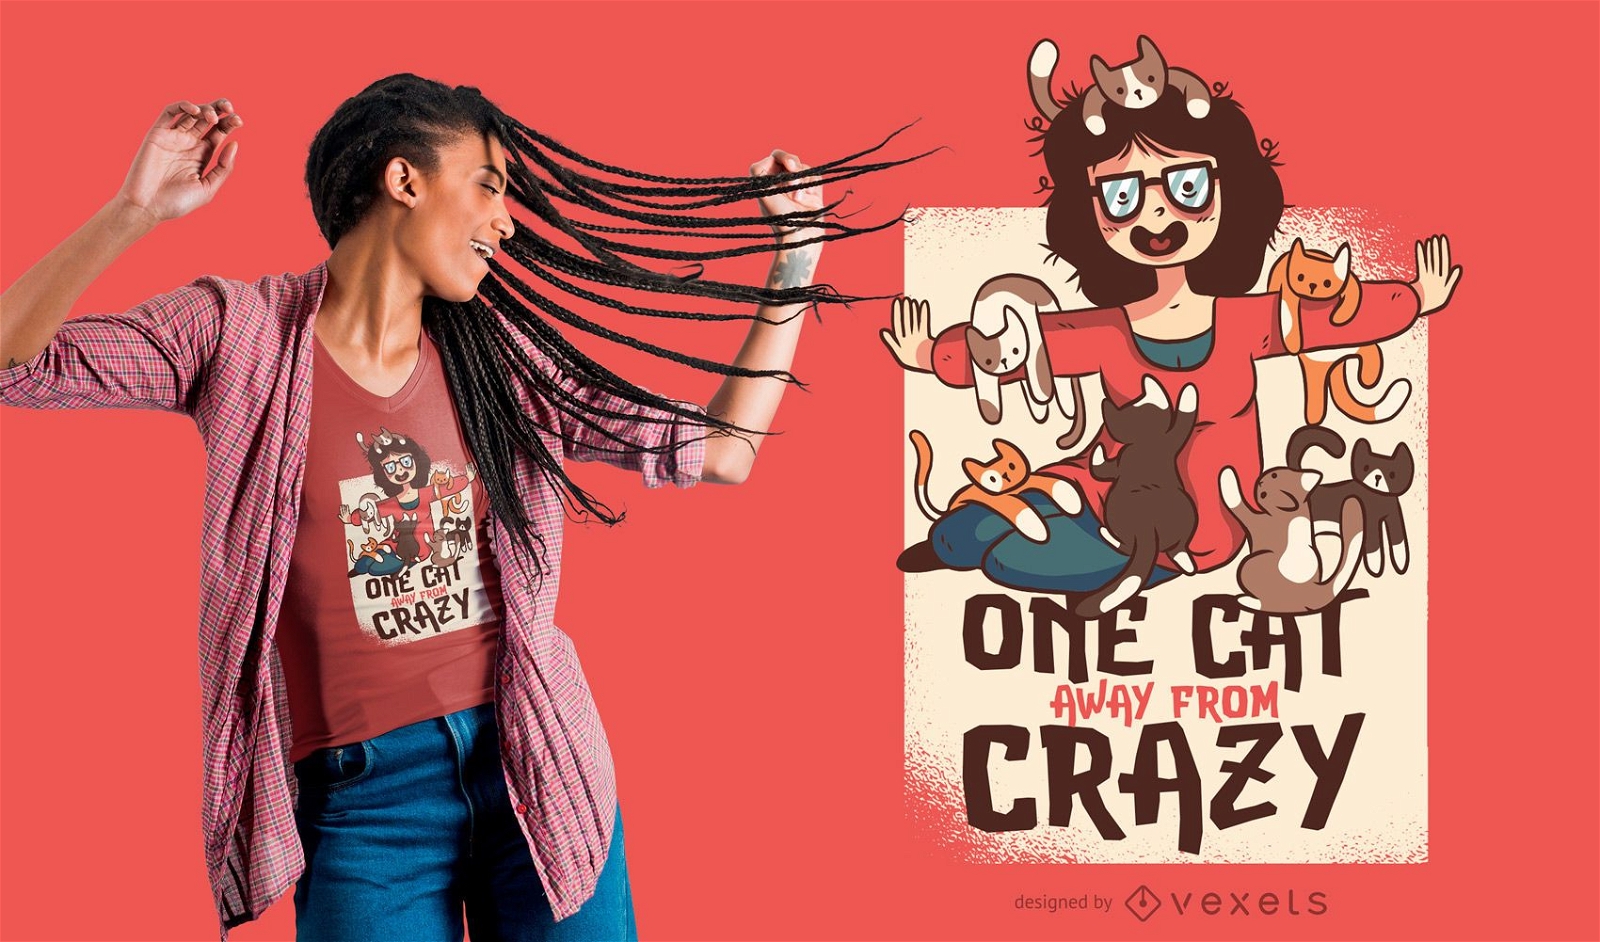 Crazy Cat Lady Funny T-shirt Design